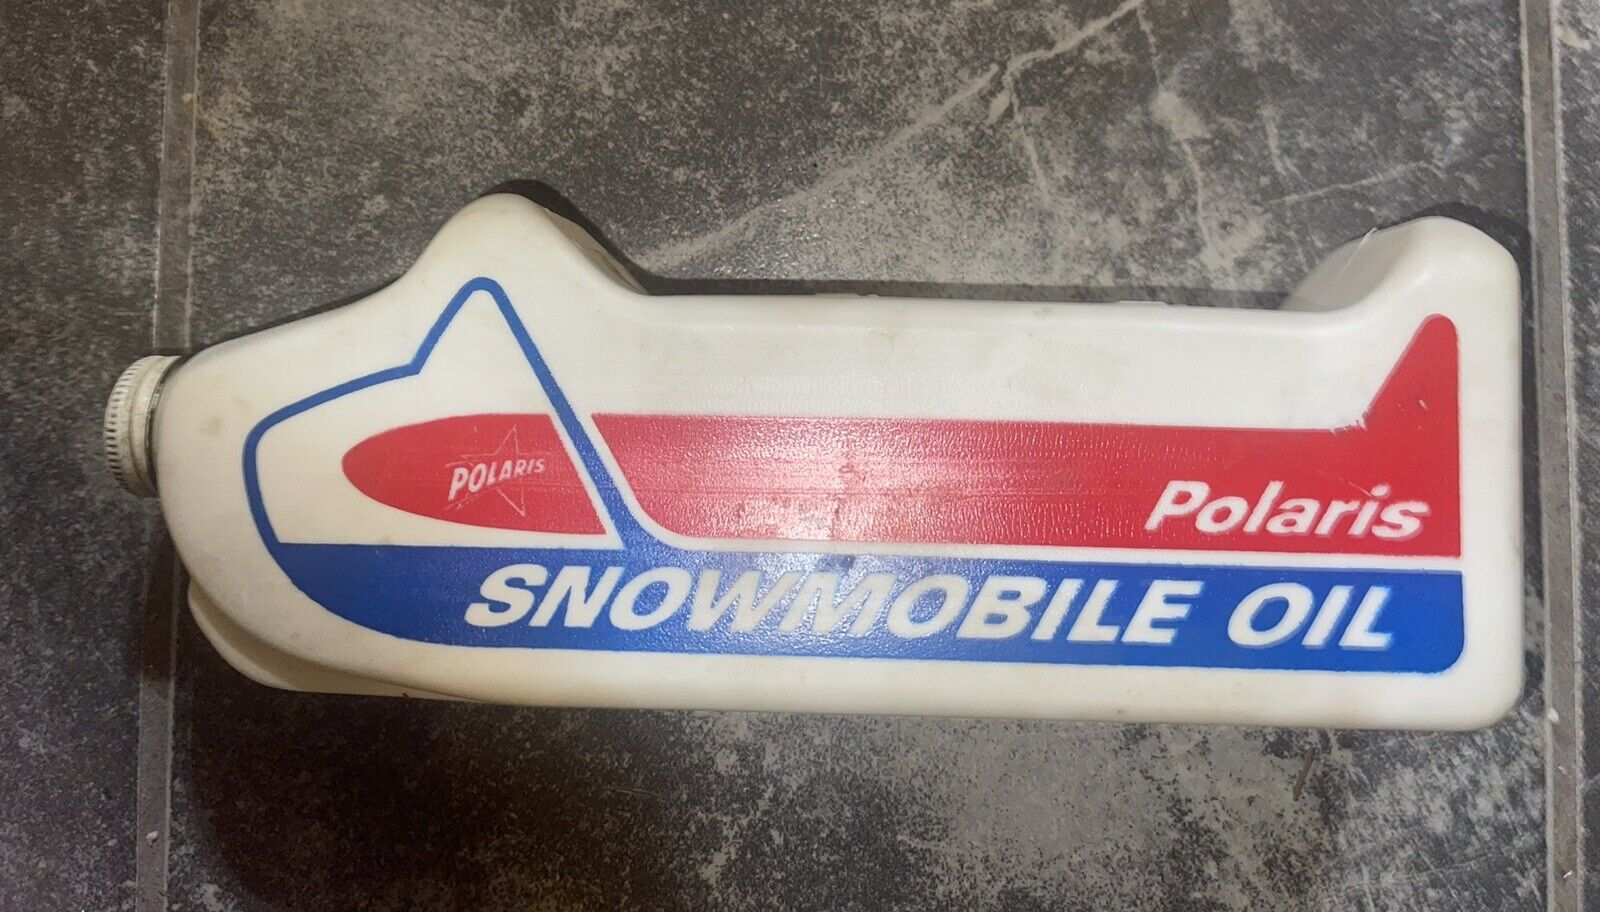 Vintage Polaris Snowmobile Oil Bottle Shaped Like A Snowmobile 1960’s-70’s